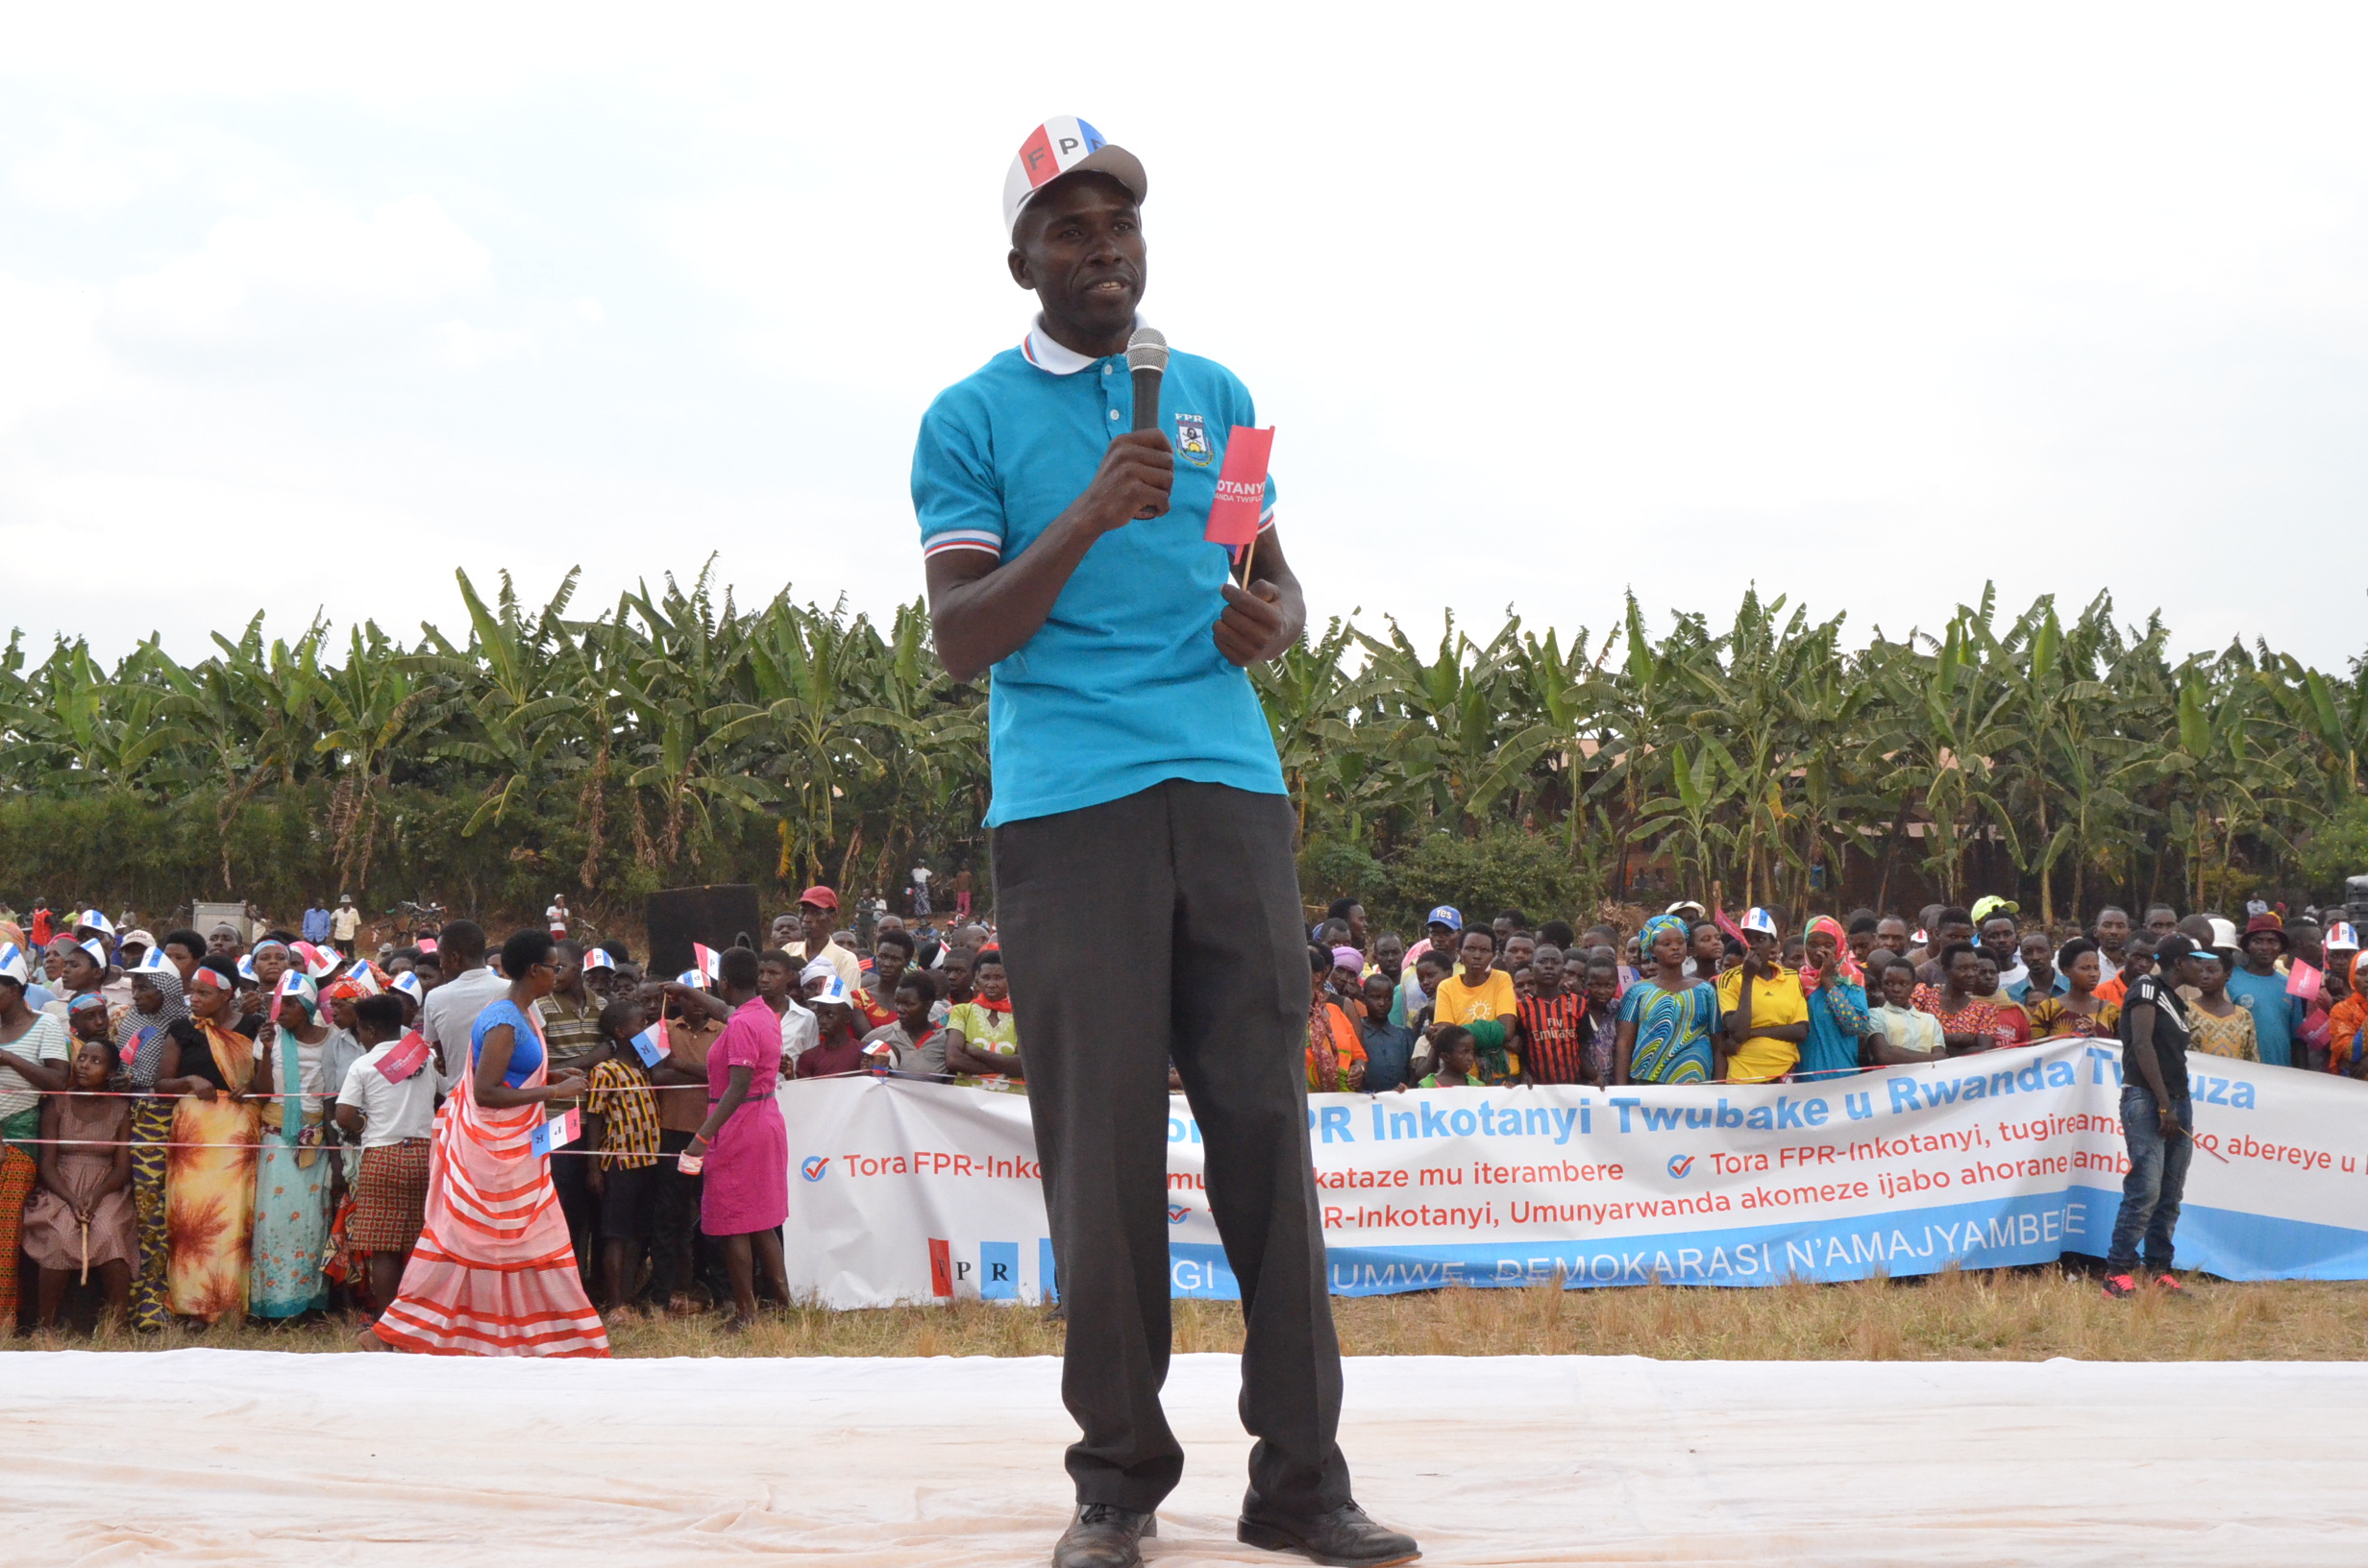 Jerome Kayiranga said how RPF Inkotanyi inspired to aim higher. He quit teaching job for self-employment.